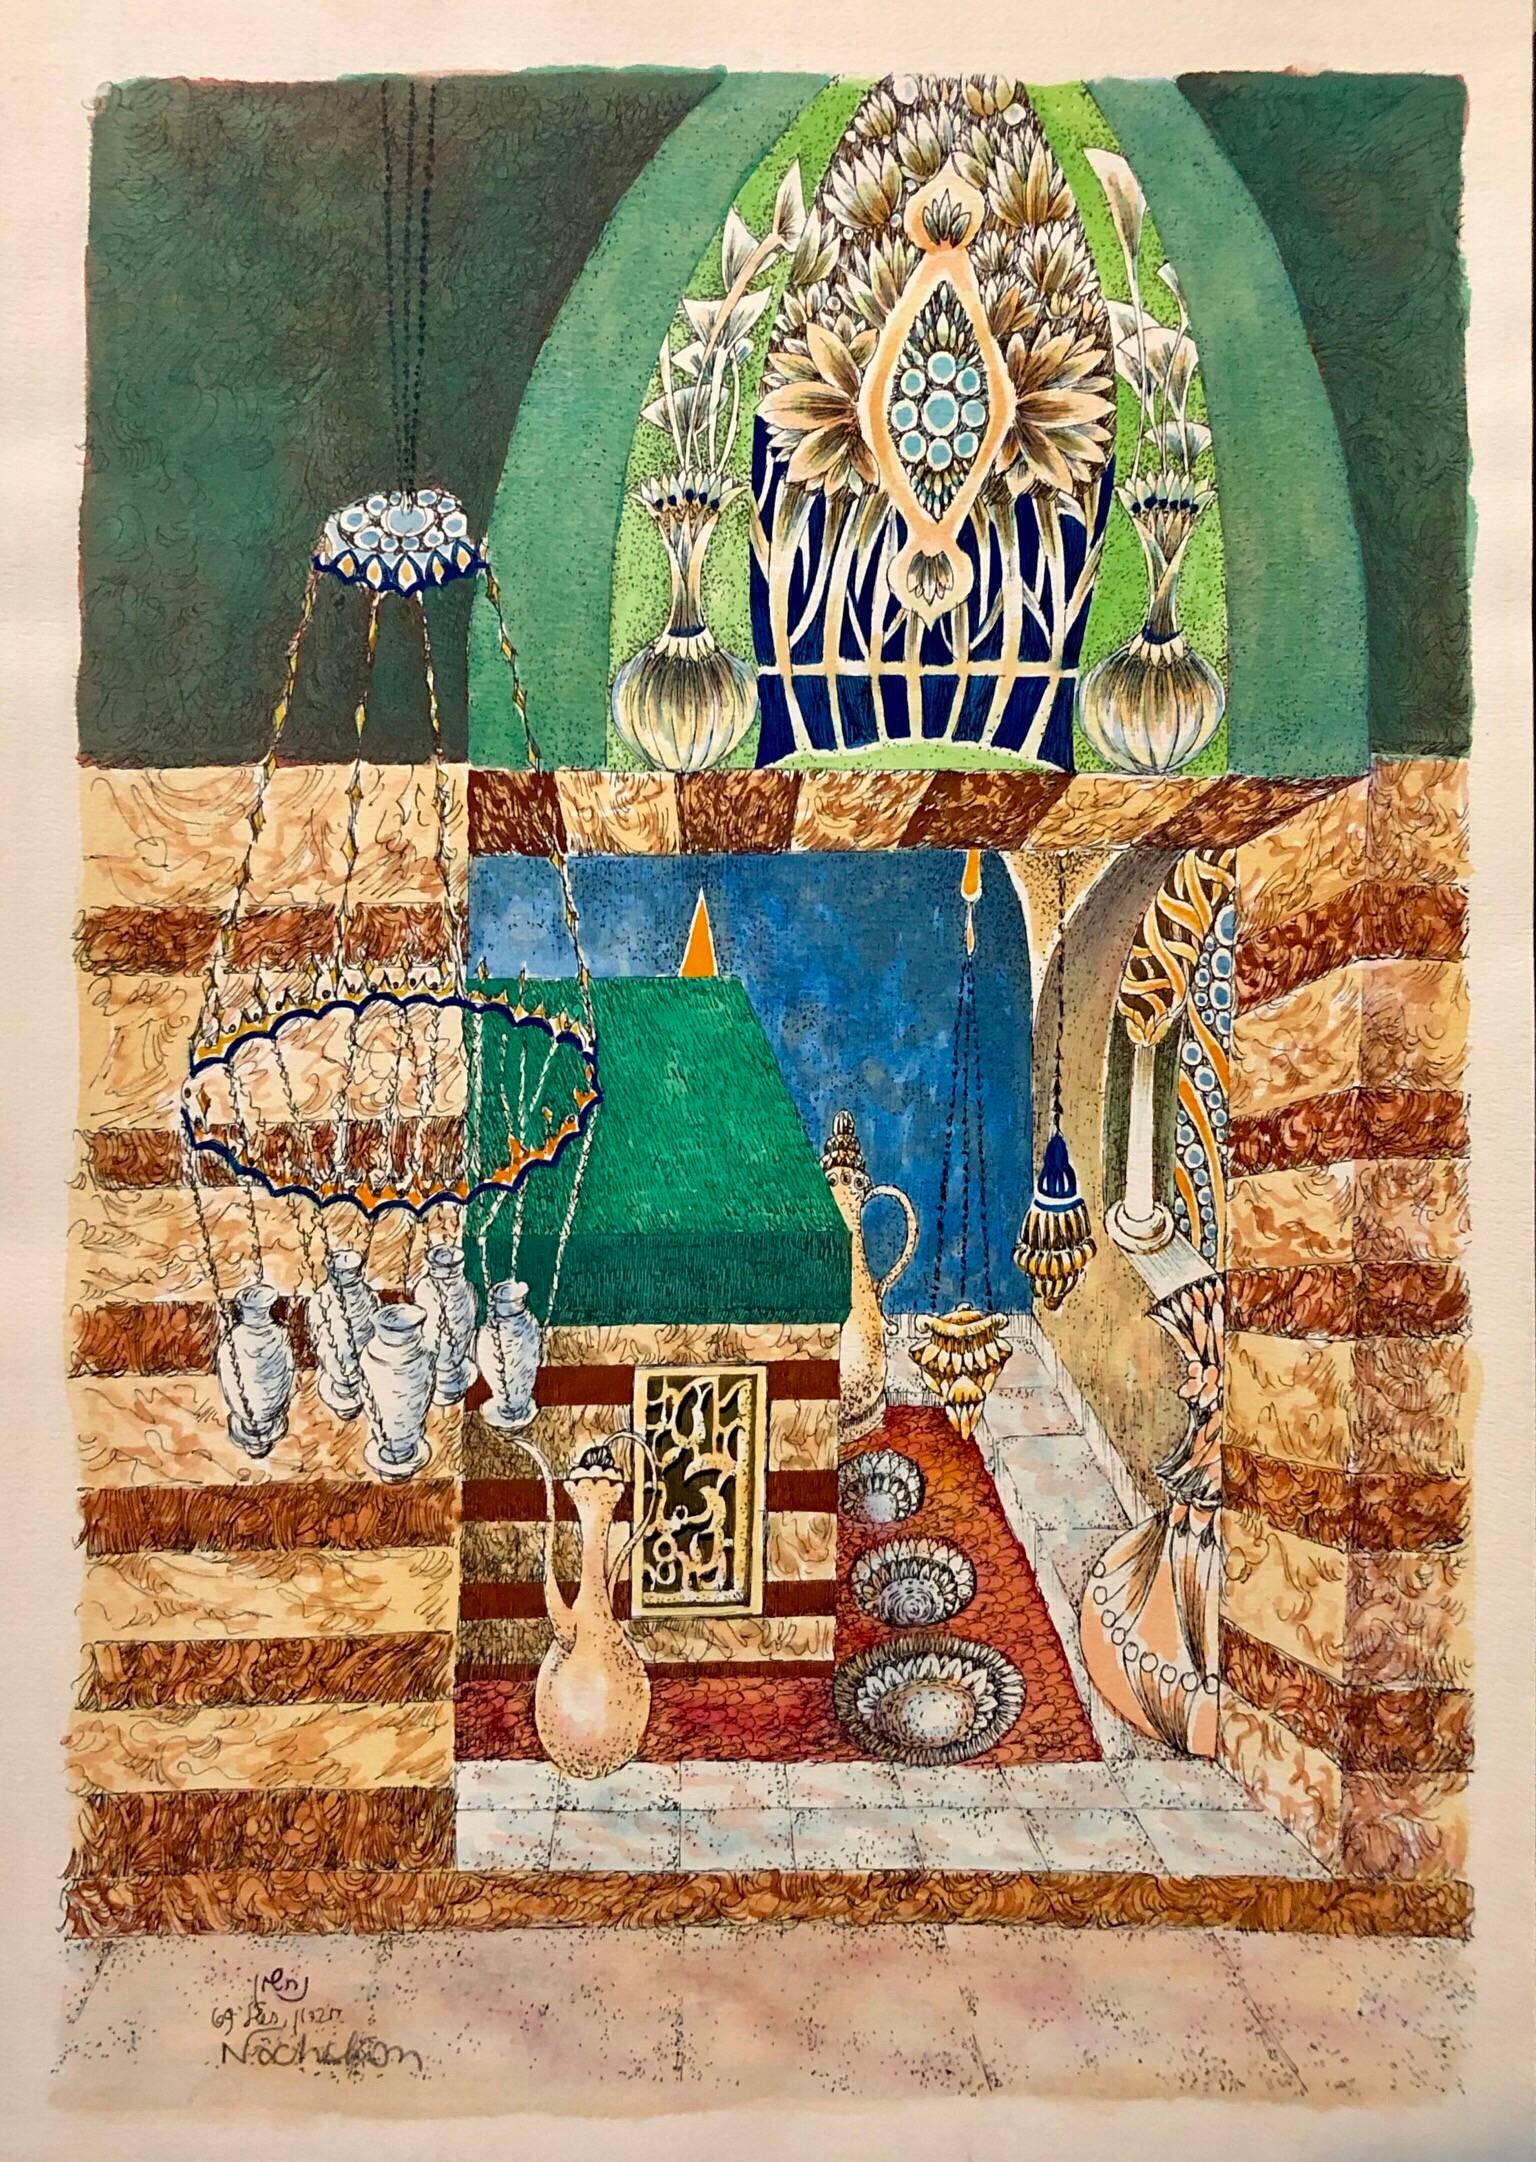 Baruch Nachshon Landscape Art - Machpela Cave Chevron 1969 Israeli Judaica Mixed Media Print Watercolor Painting